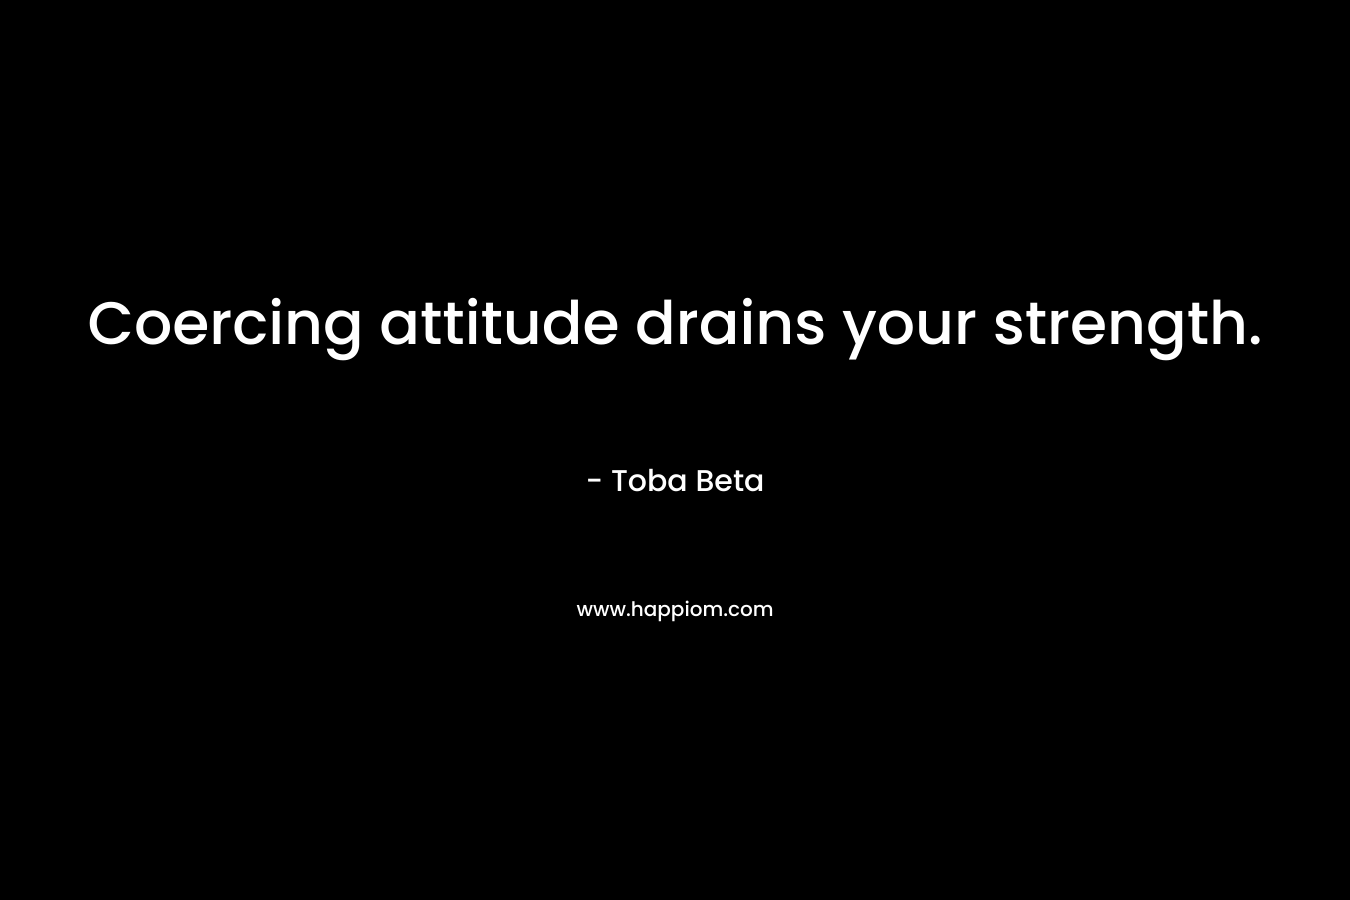 Coercing attitude drains your strength. – Toba Beta